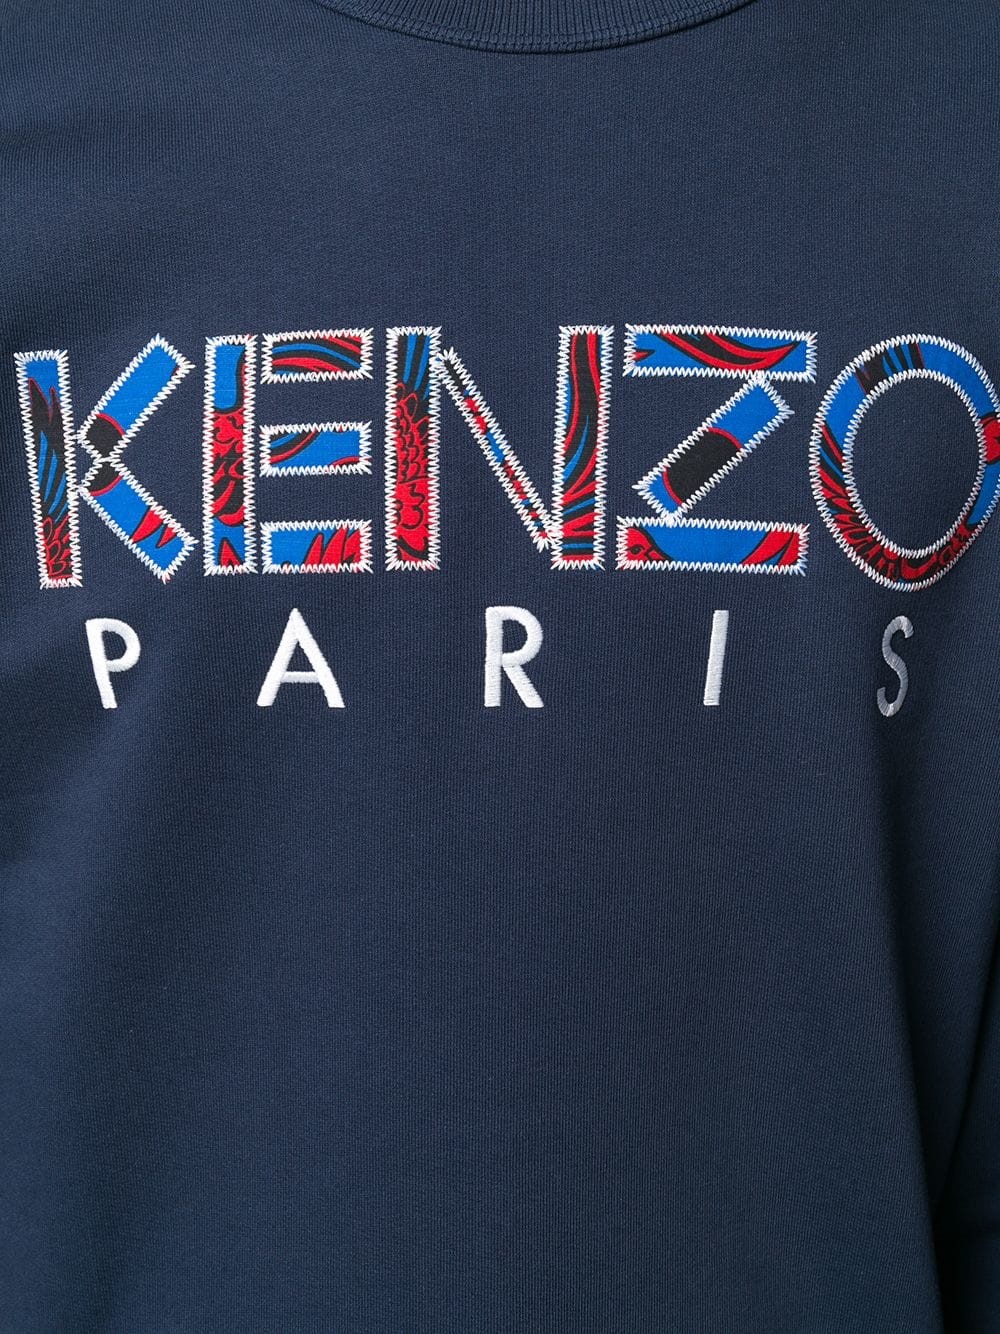 kenzo KENZO PARIS SWEATSHIRT available on montiboutique.com - 26875